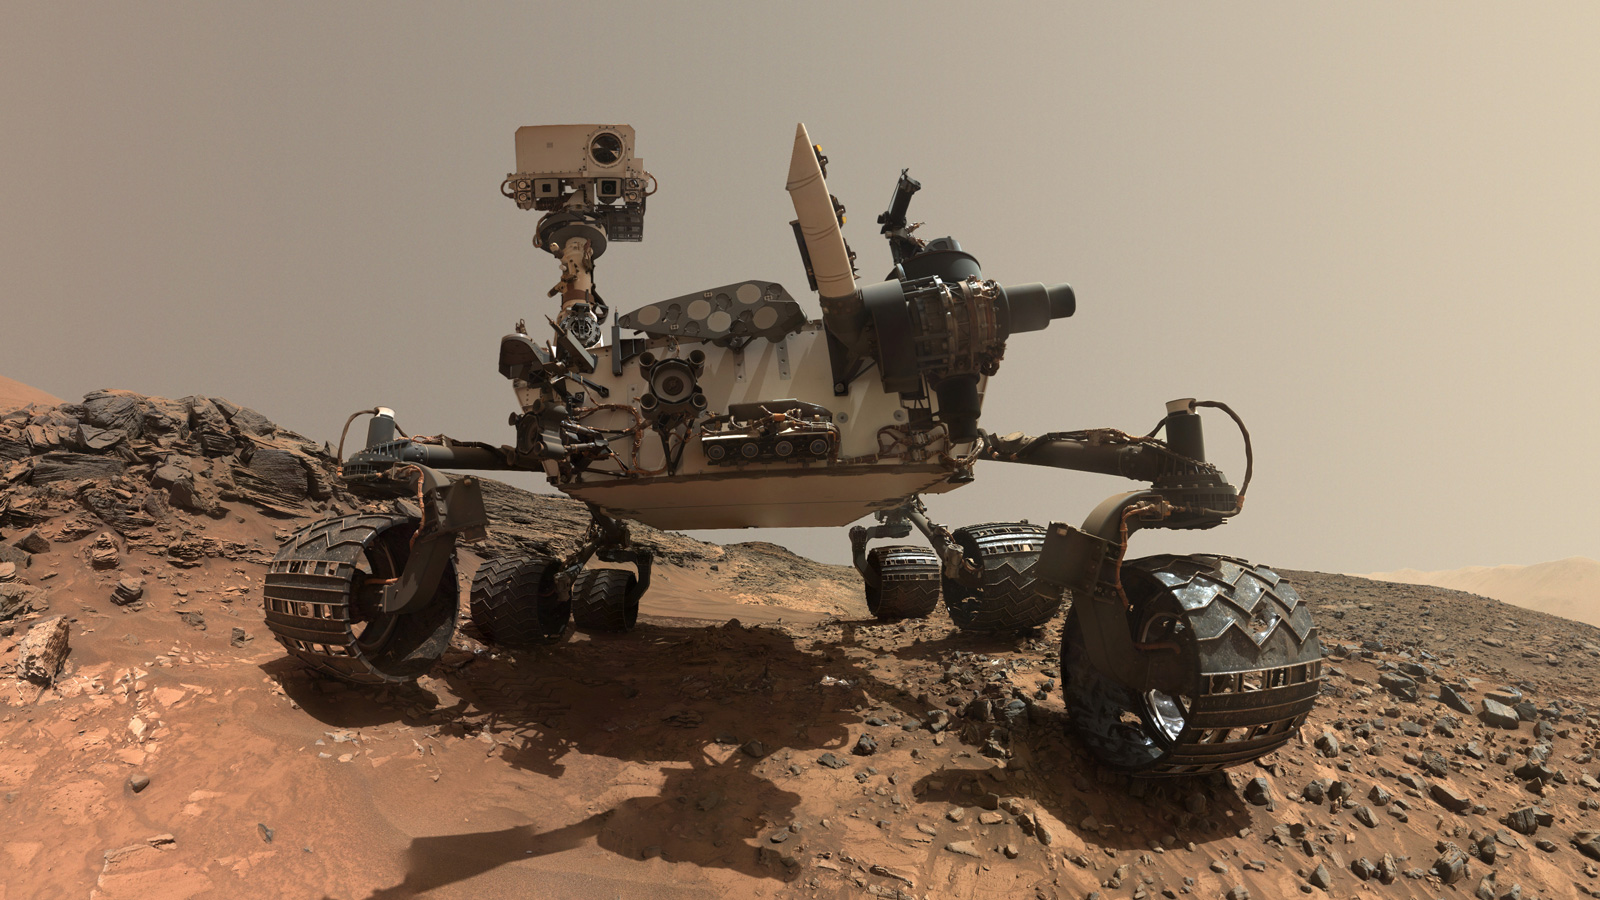 Home | Curiosity – NASA’s Mars Exploration Program